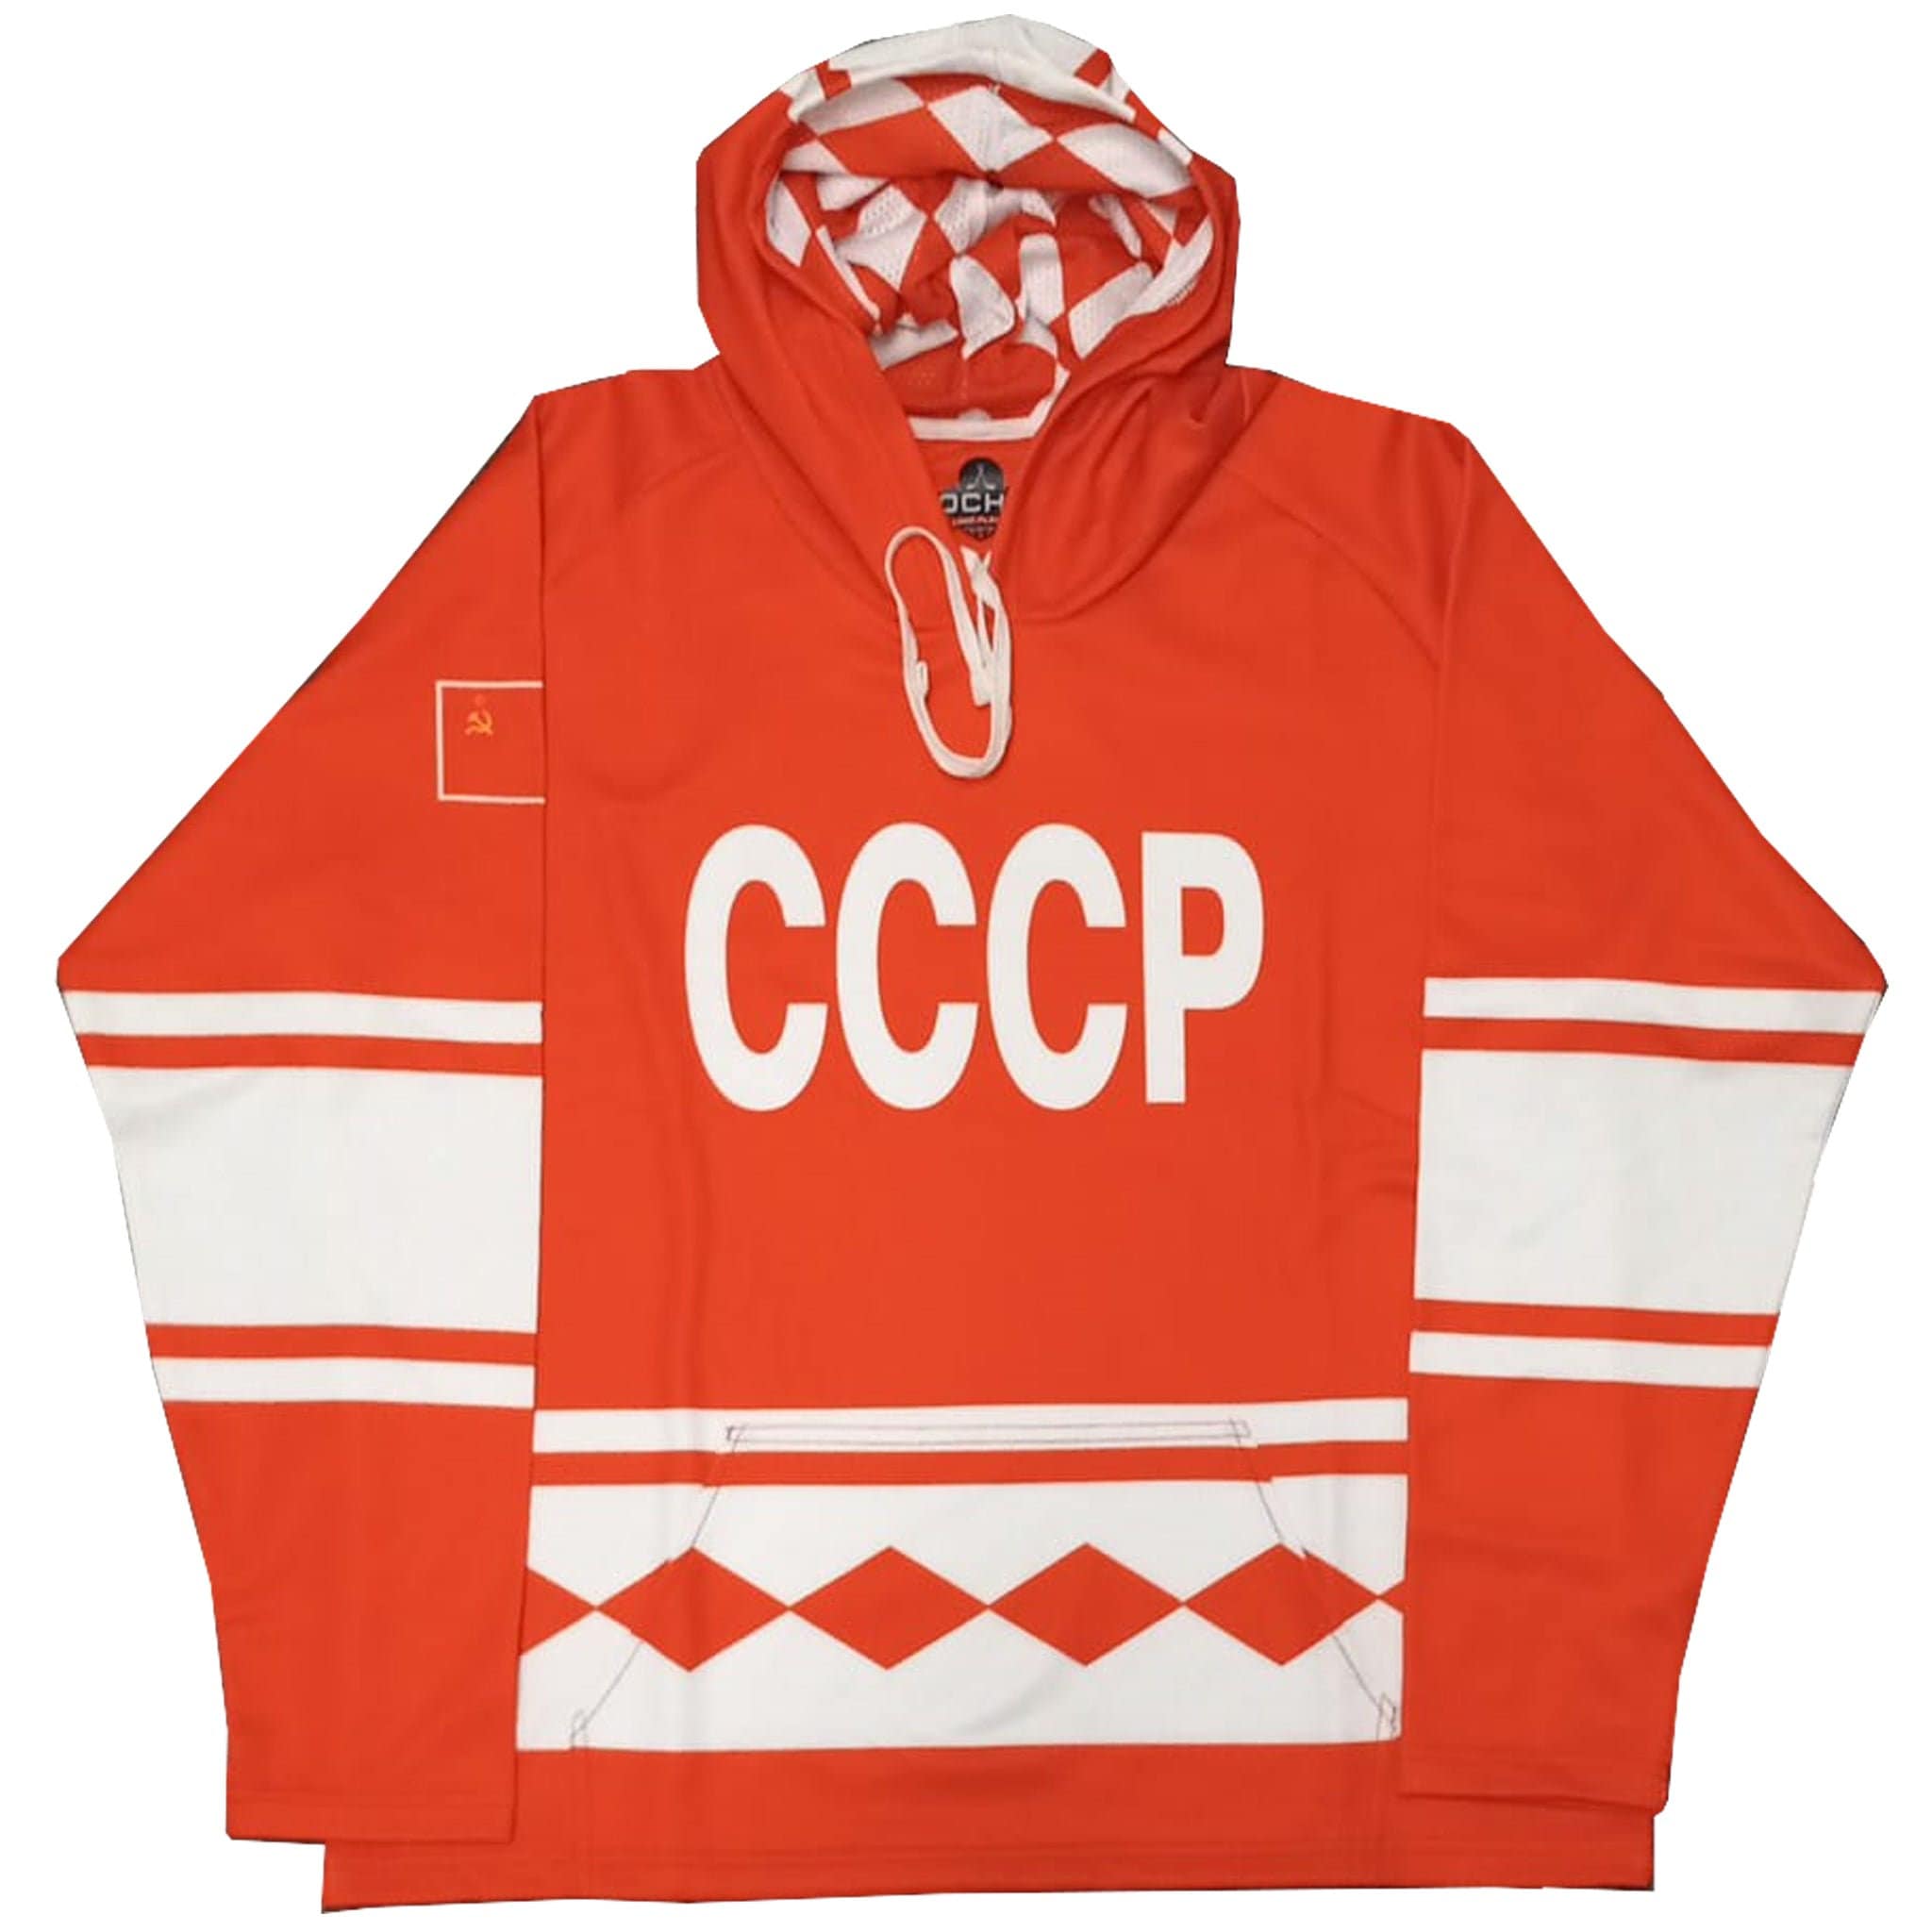 CCCP Trump 45 Russian Collusion Hockey Jersey T Shirt